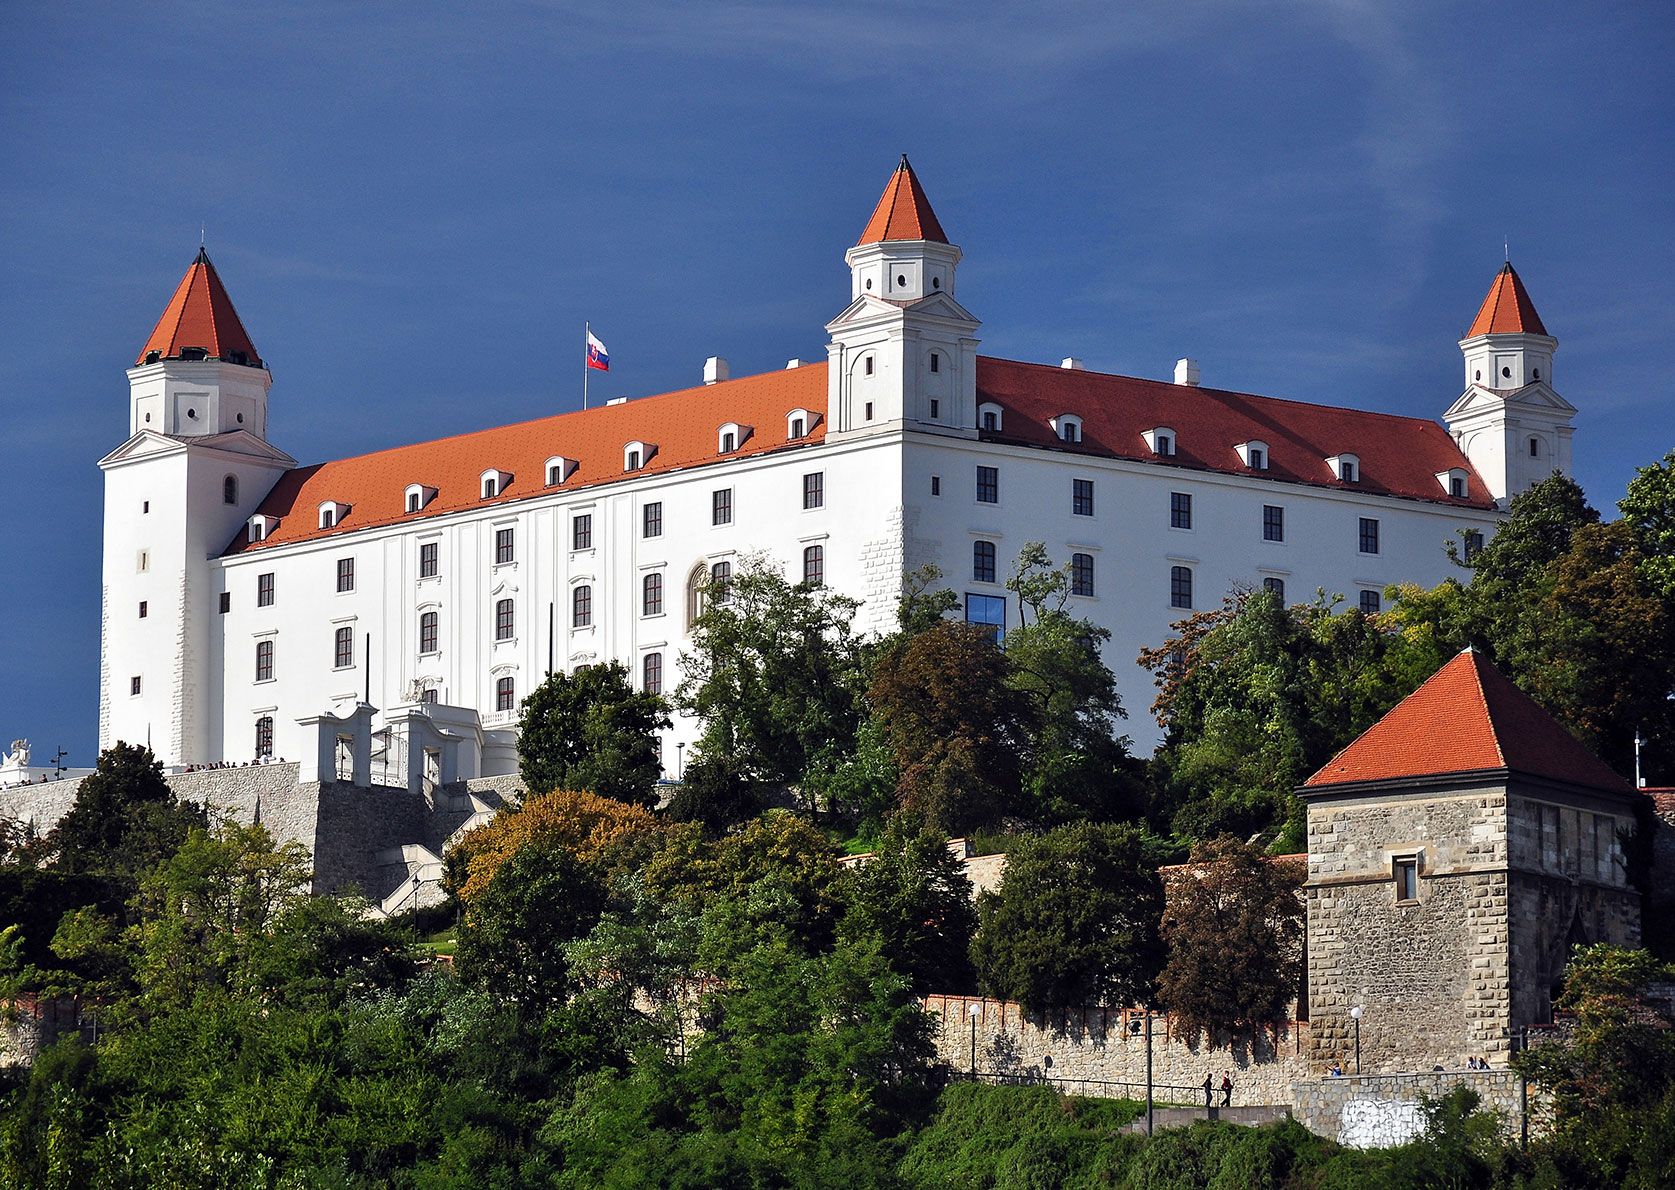 European long-distance hiking trails Sultan’s Trail Bratislava Hrad or castle